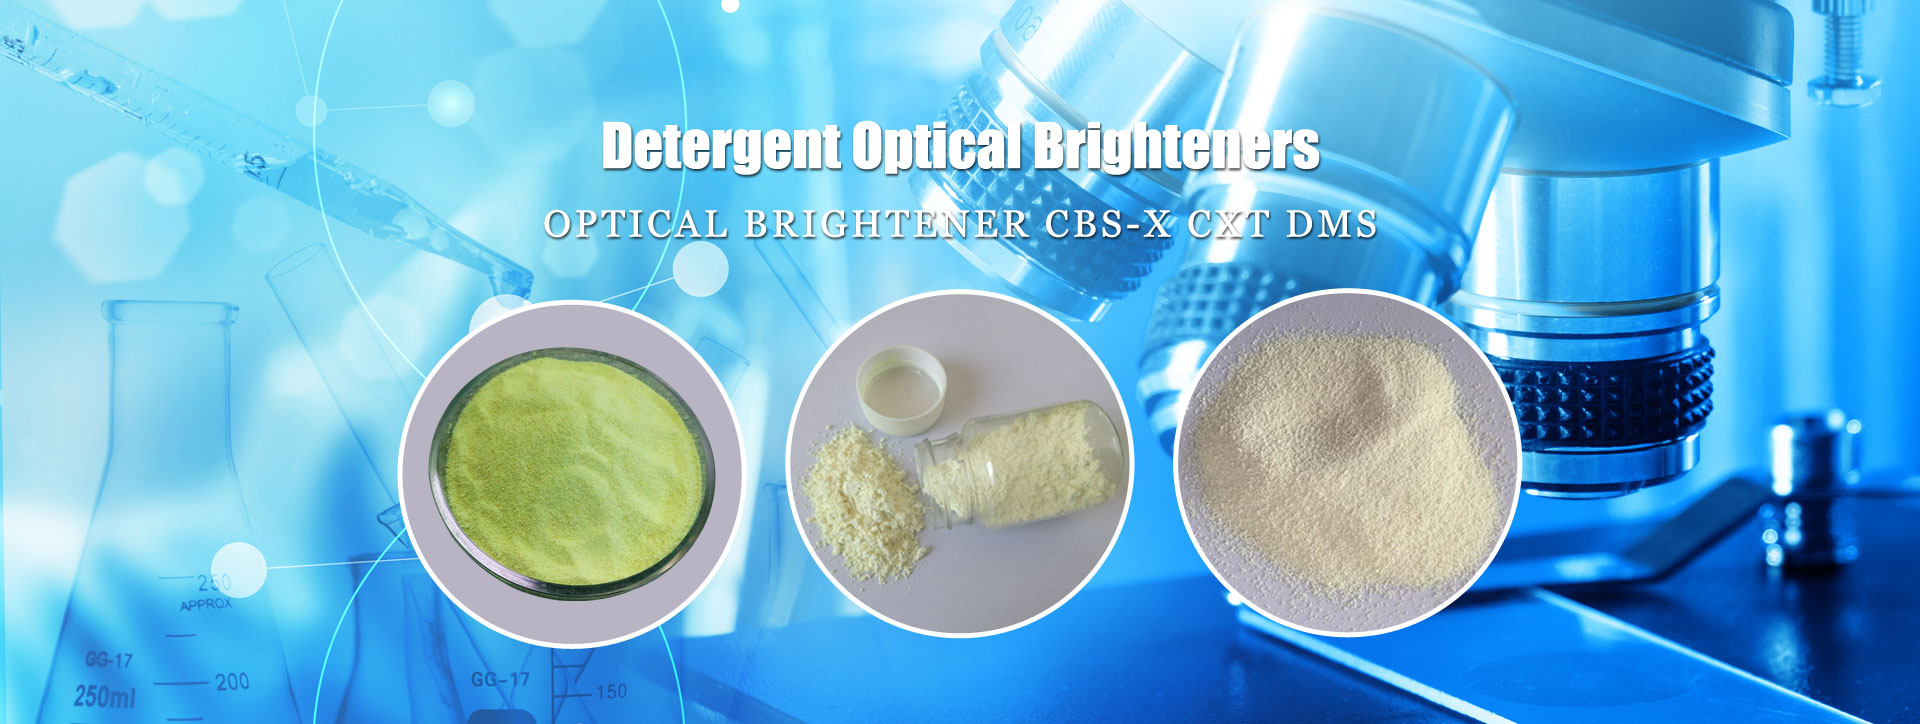 Detergent Optical Brighteners